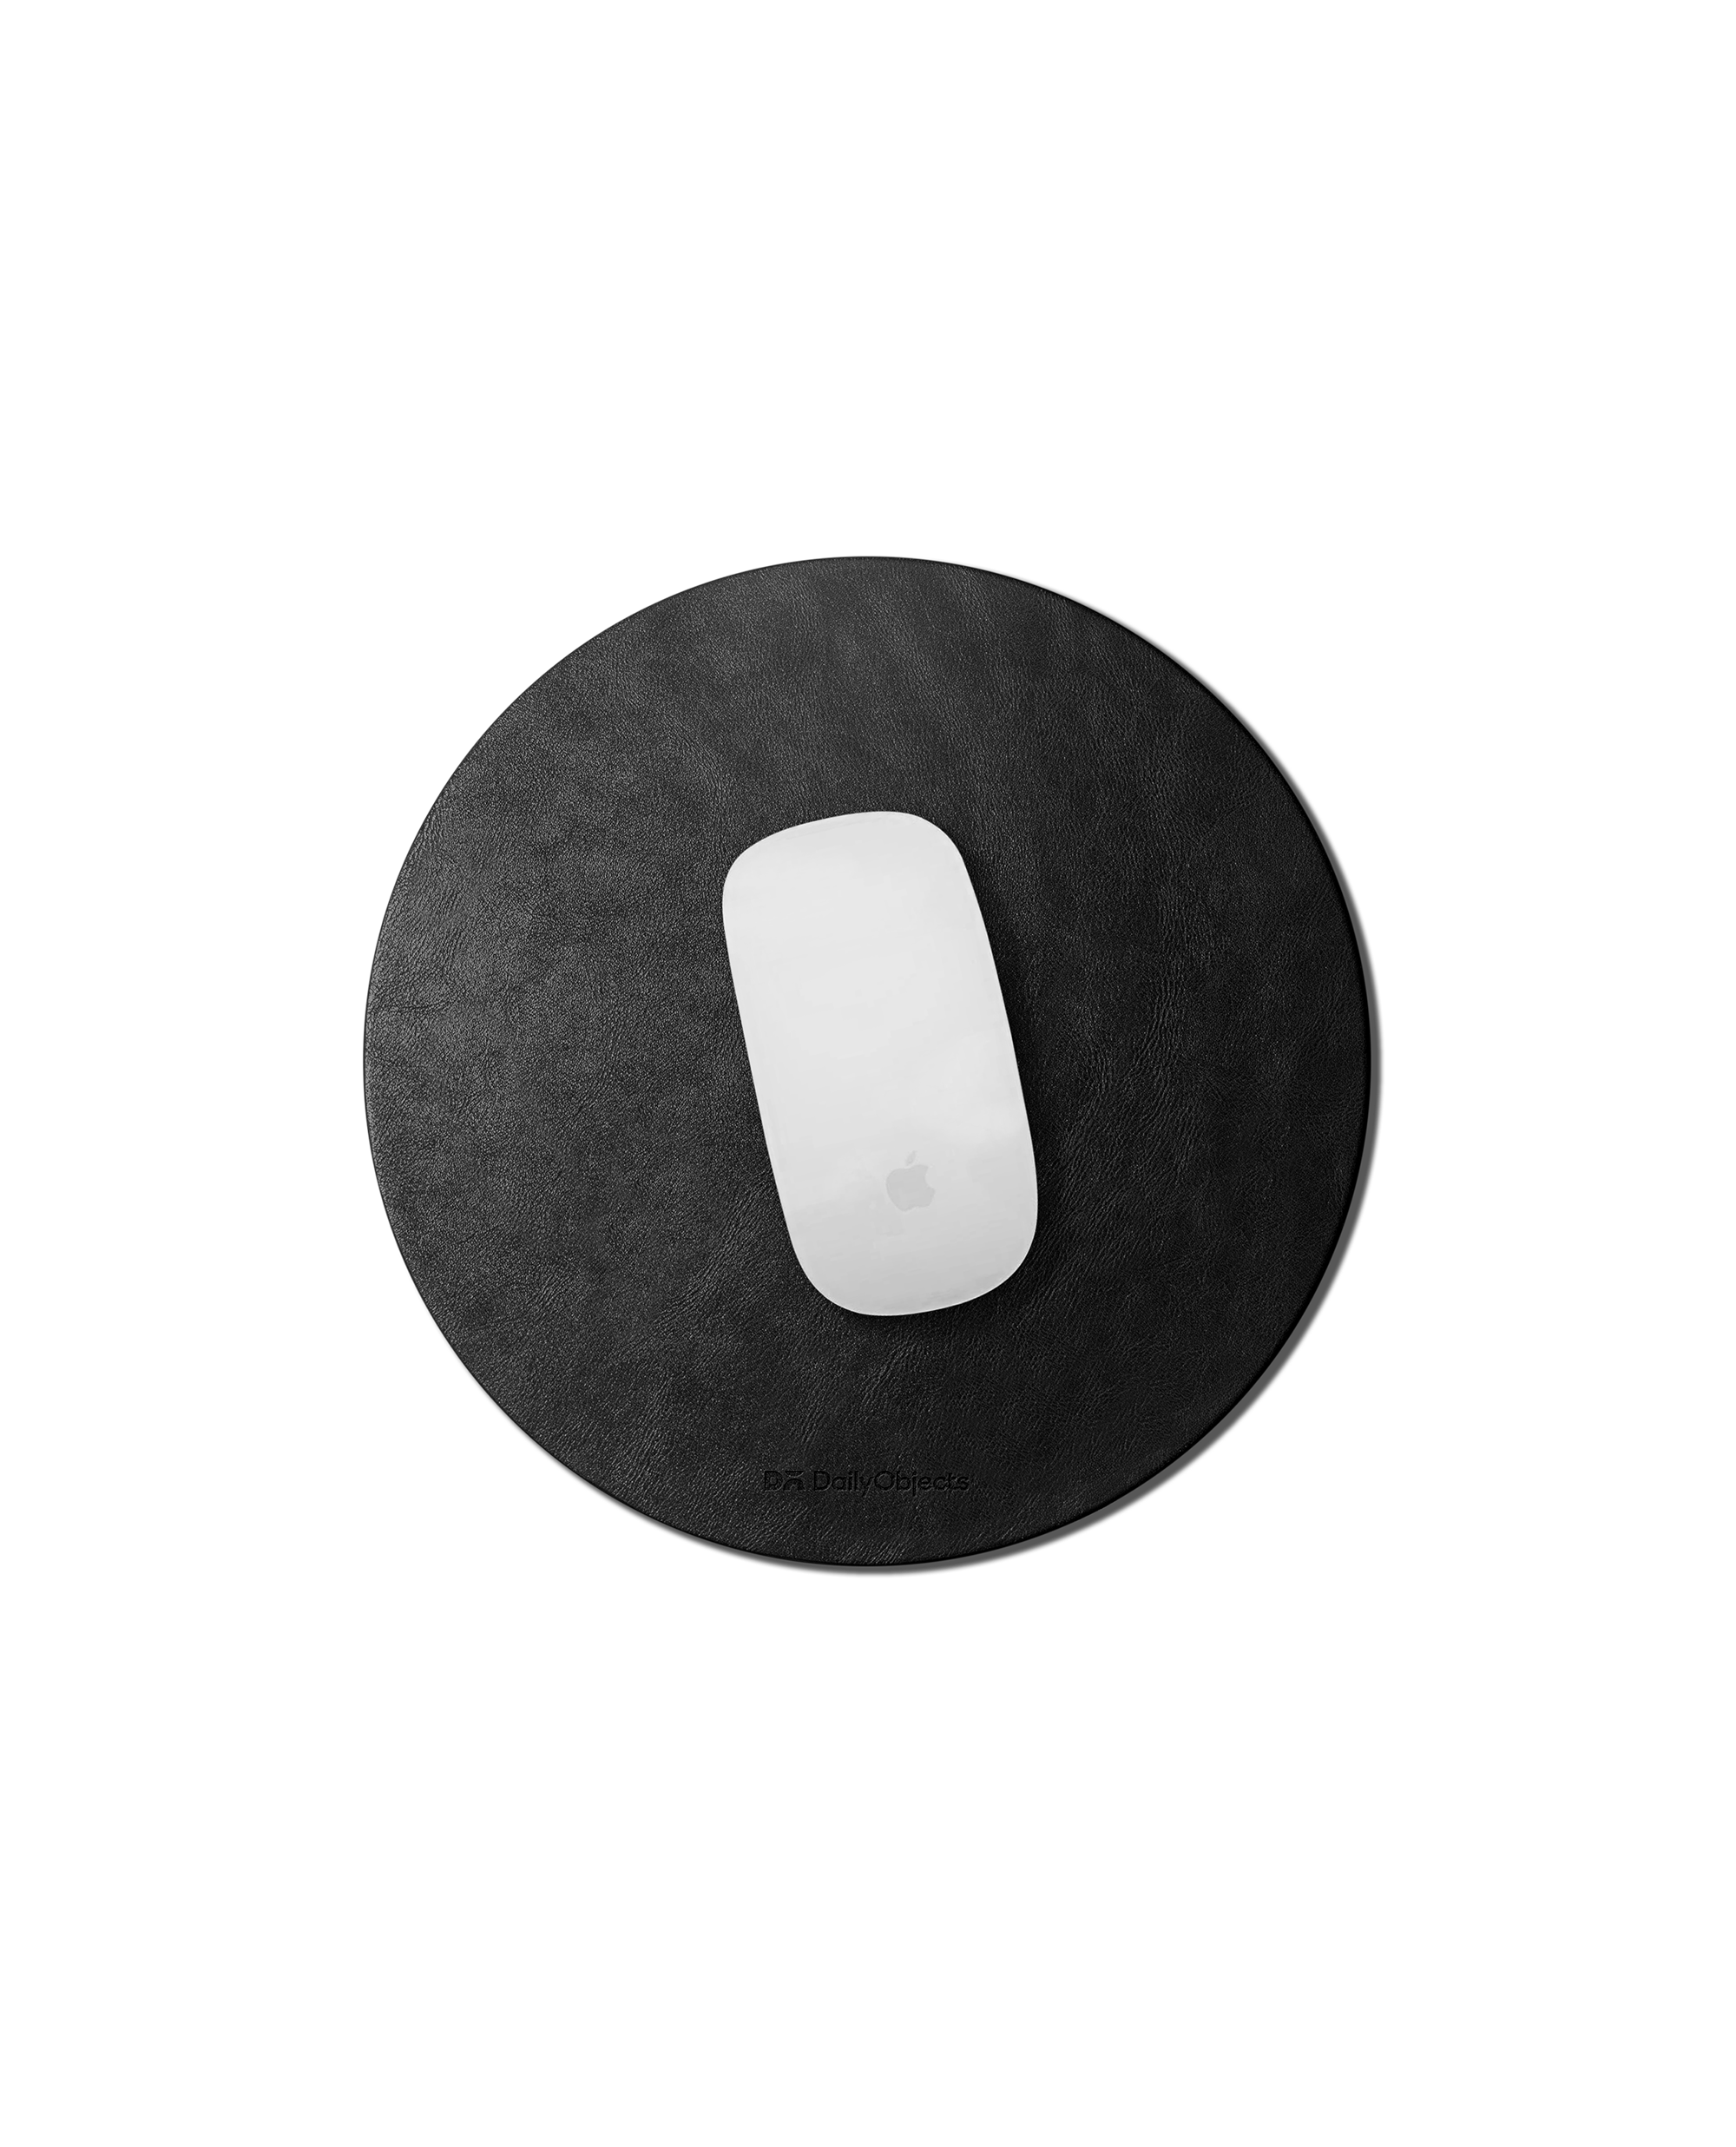 Turf 2.0 Felt Desk Mat Mouse Pad - (Grey) Buy At DailyObjects